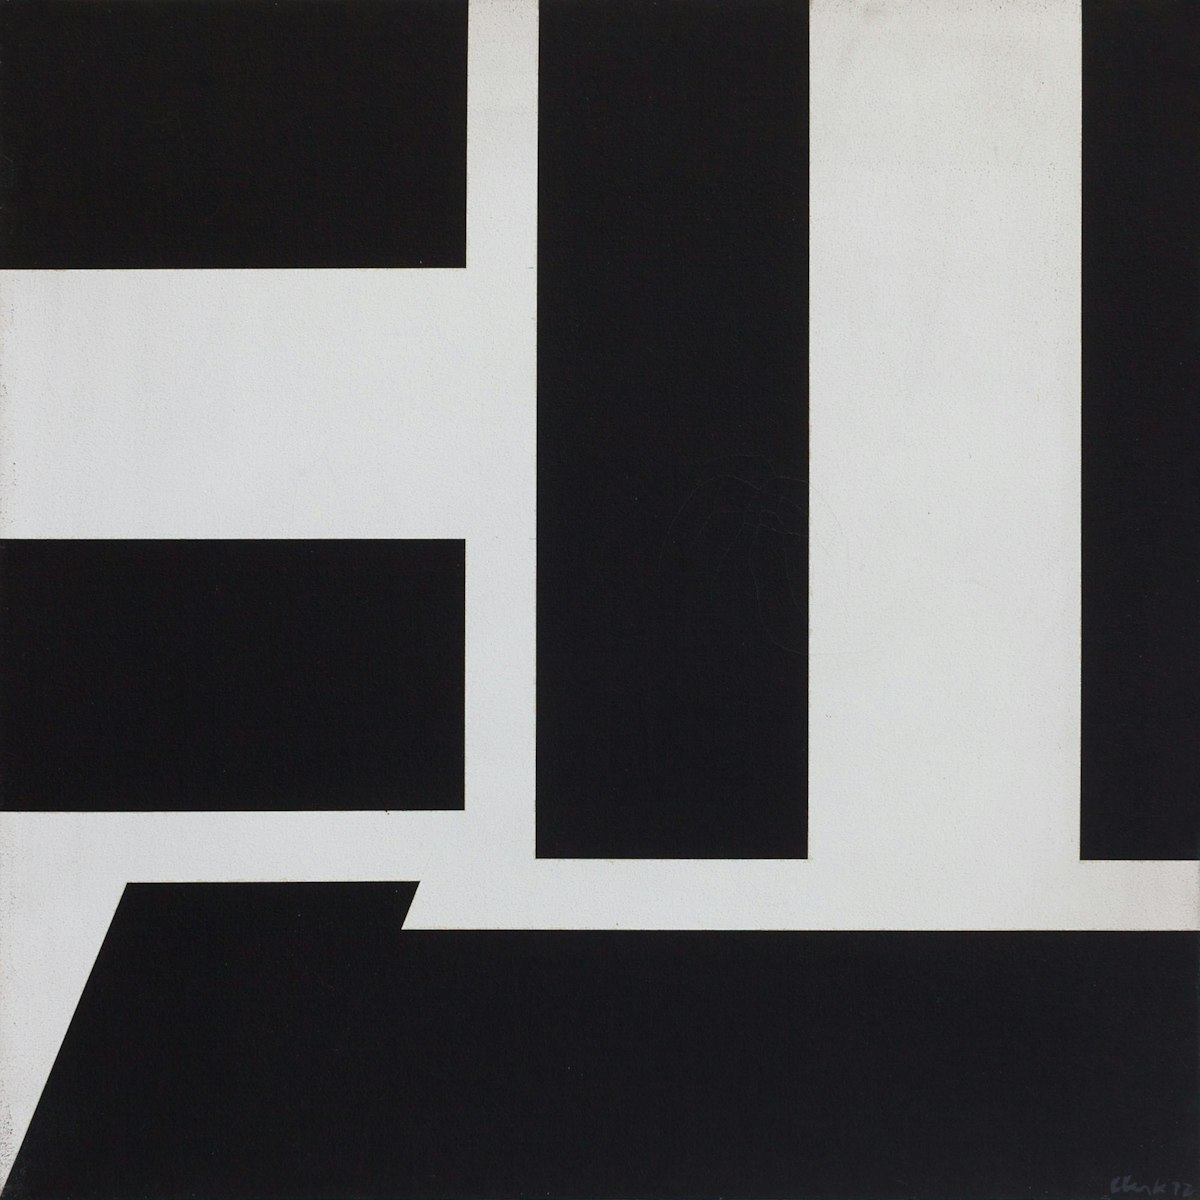 Pierre Clerk, American Art, abstract